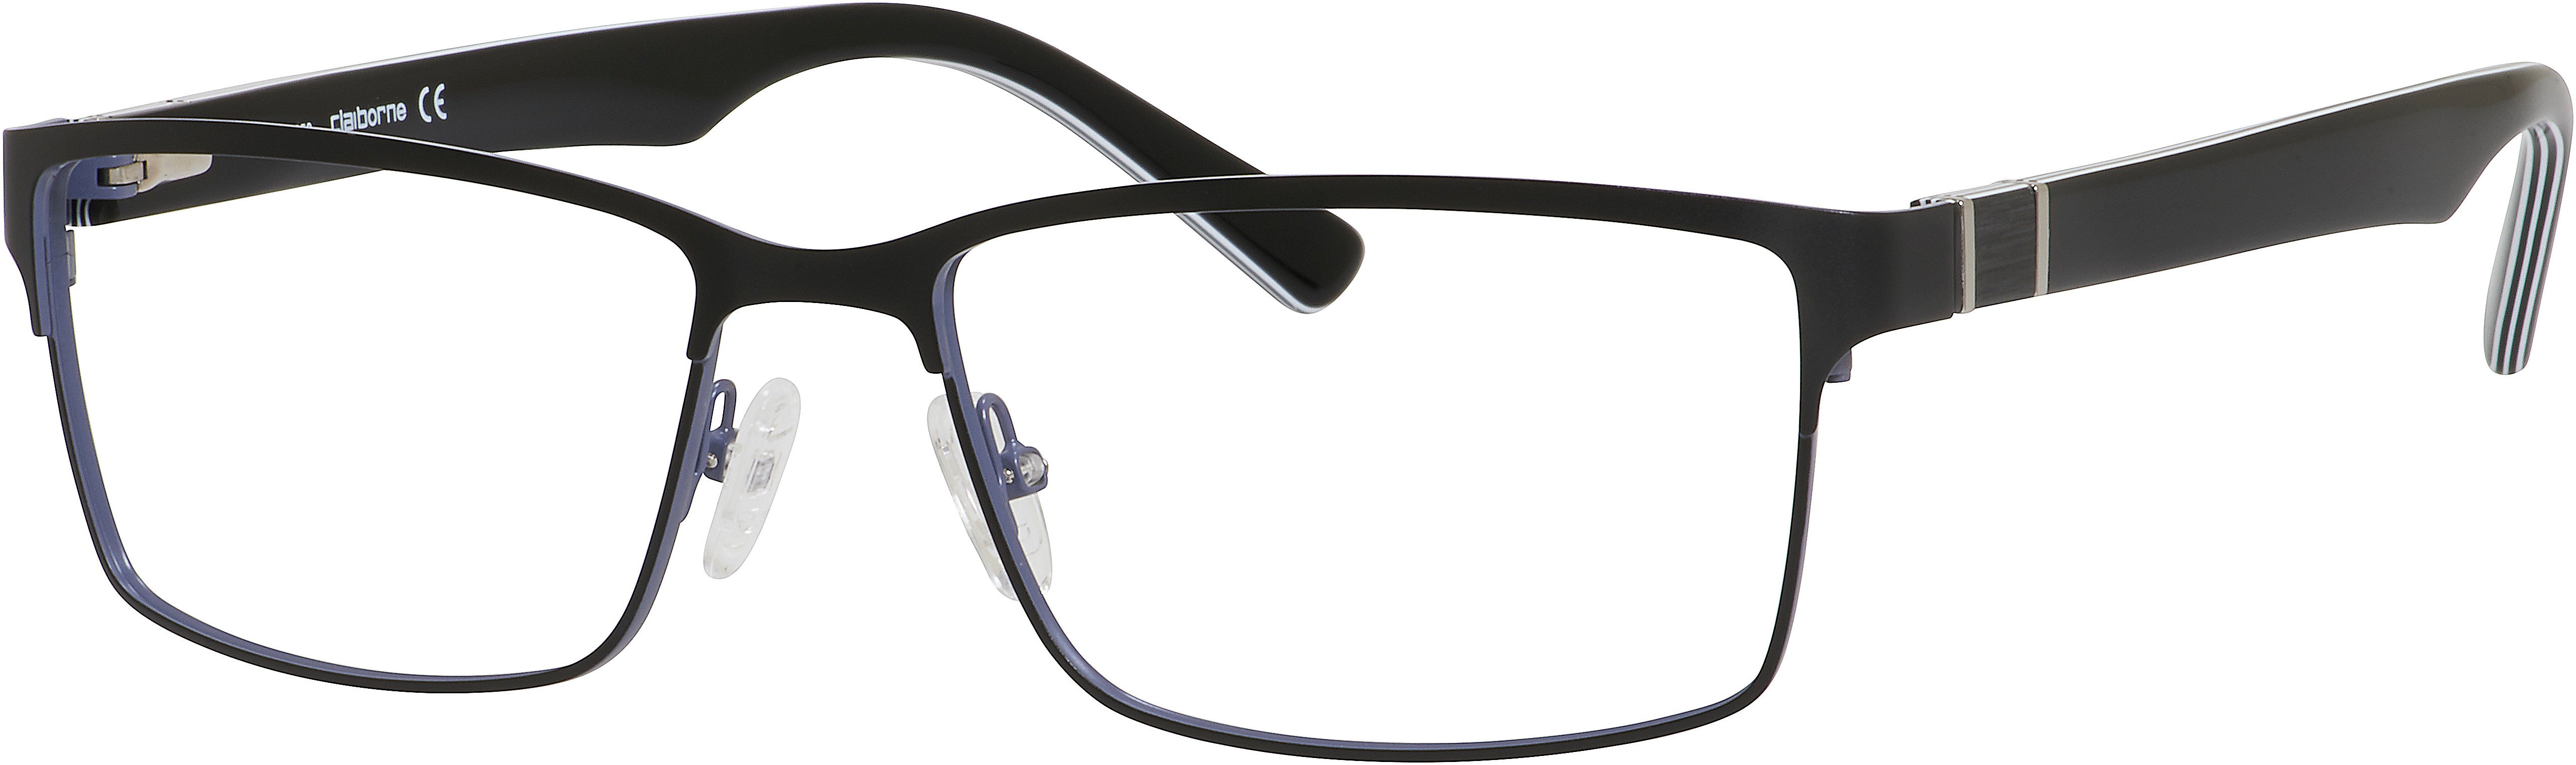  Claiborne 219 Rectangular Eyeglasses 0LF1-0LF1  Black Gray (00 Demo Lens)